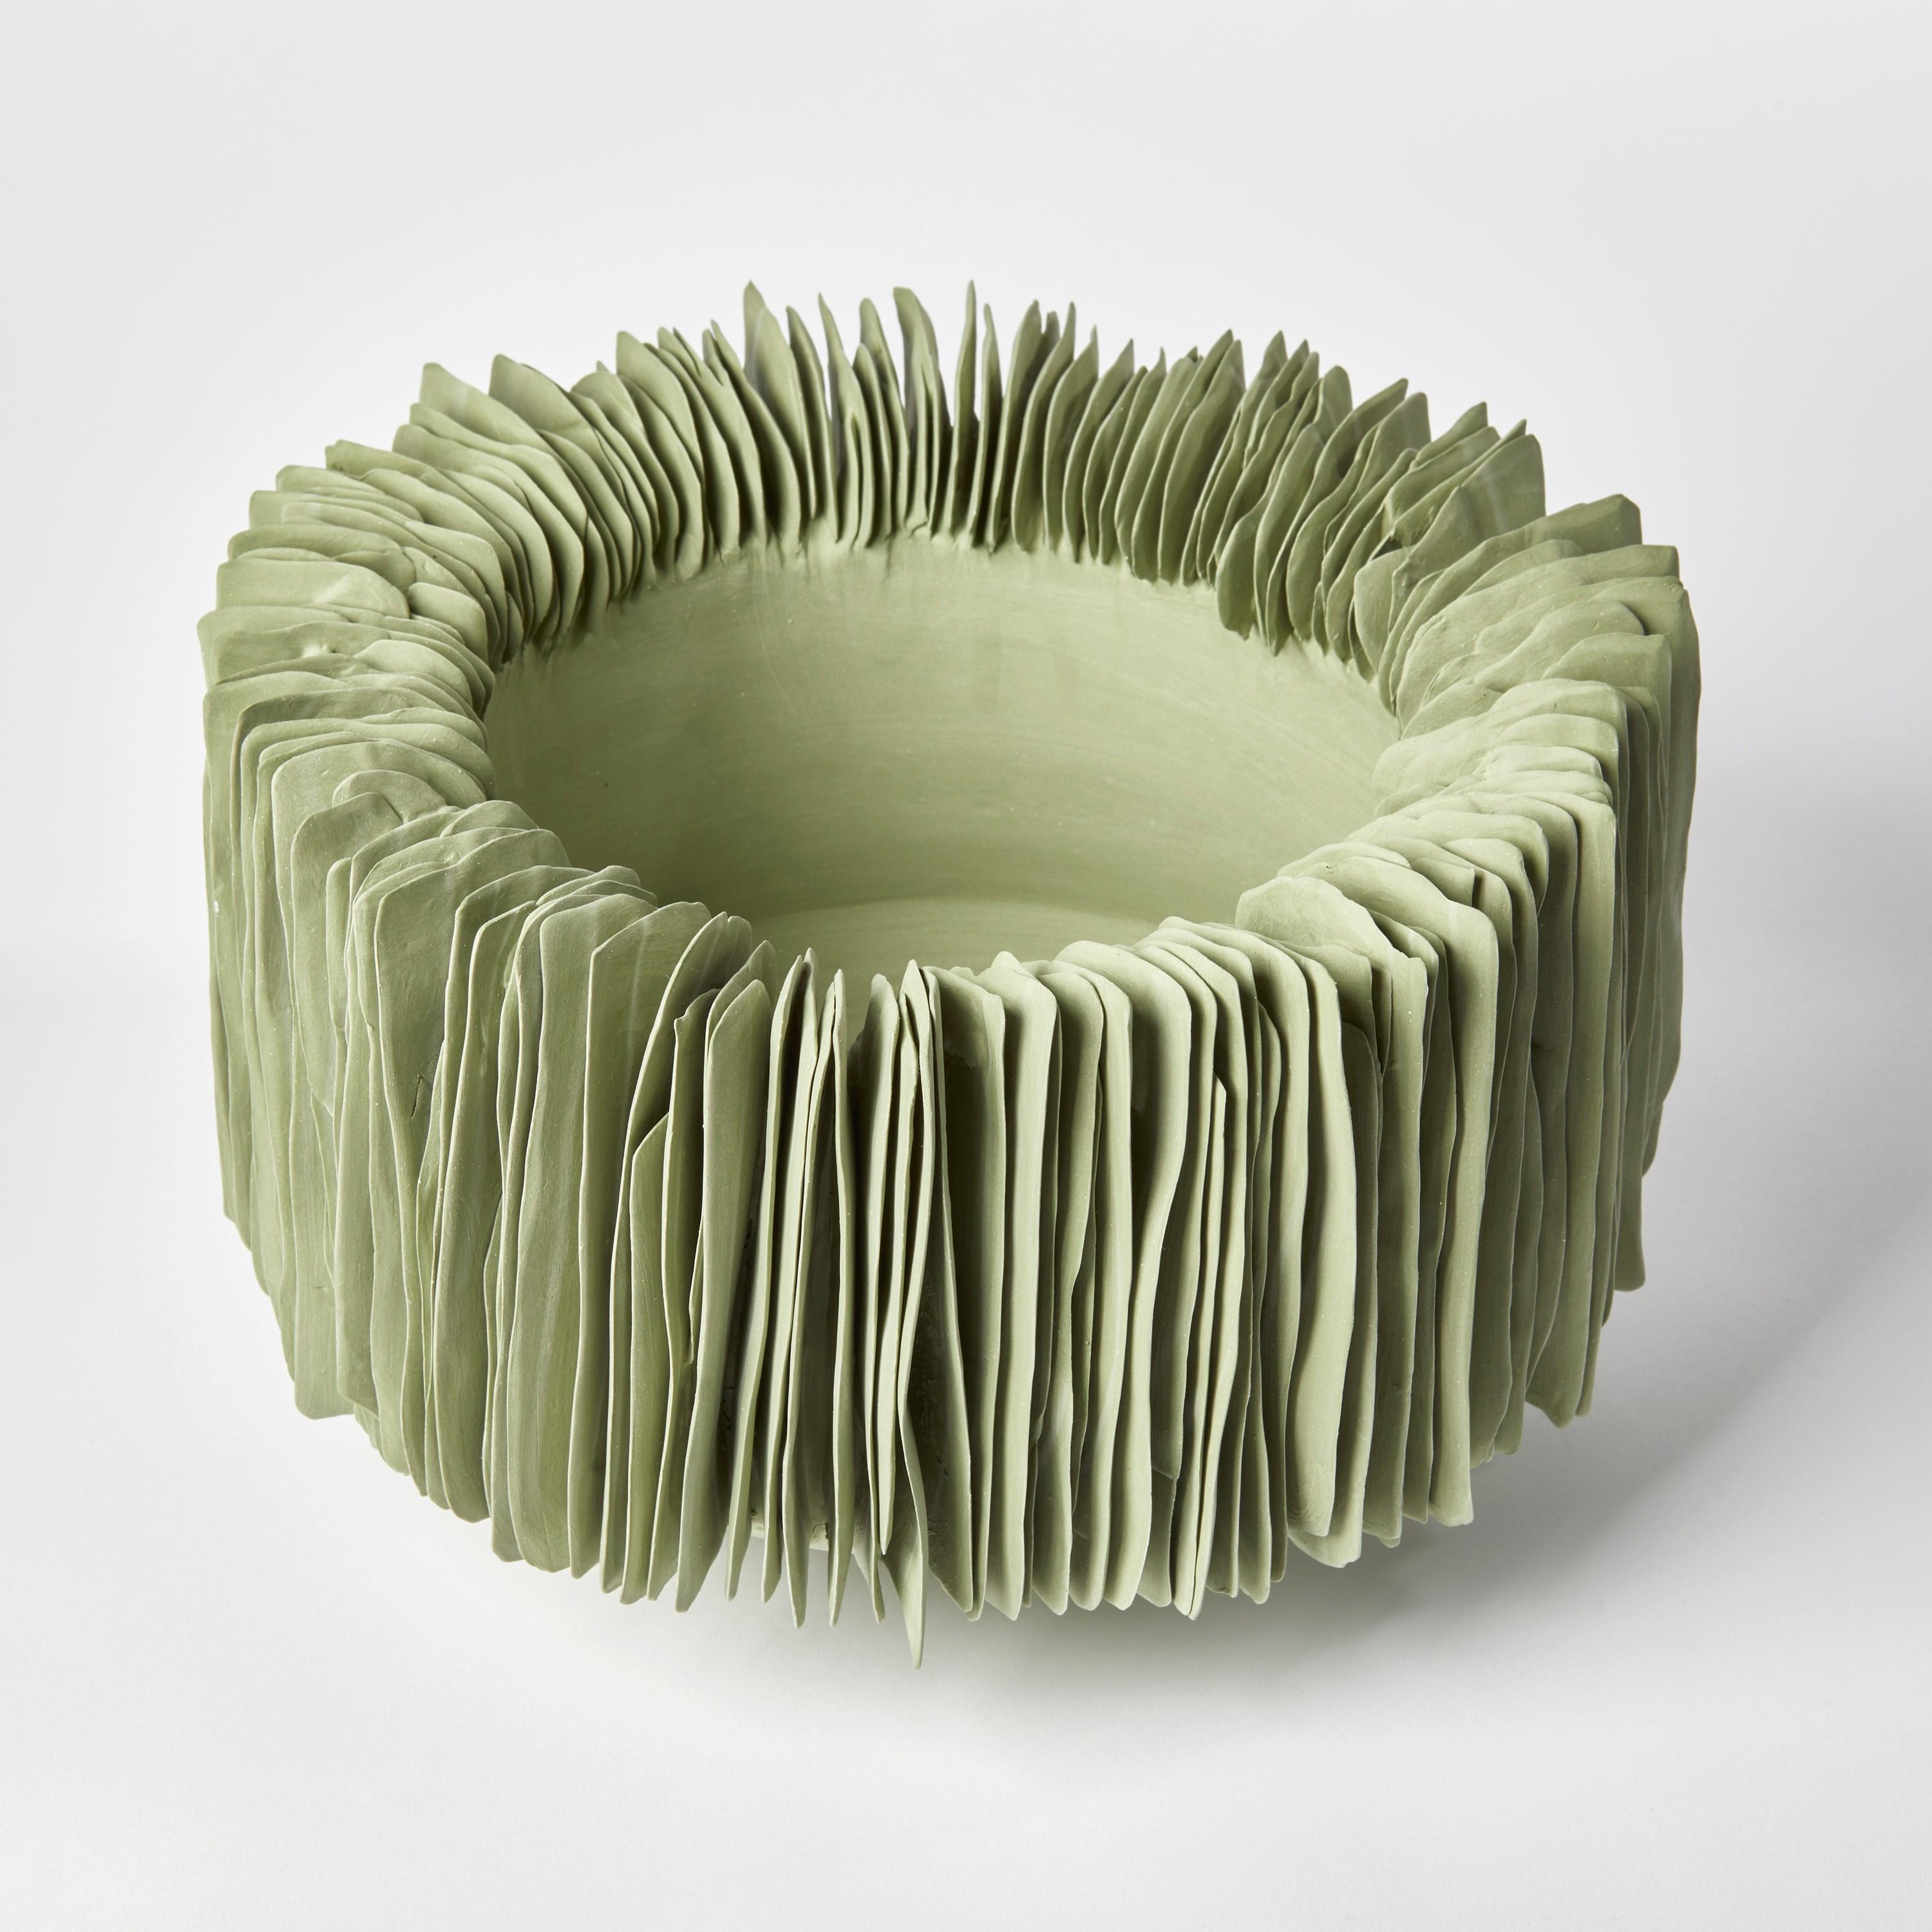 Organic Modern Wide Vertical Bowl in Olive Green, Ridged Porcelain Sculpture by Olivia Walker